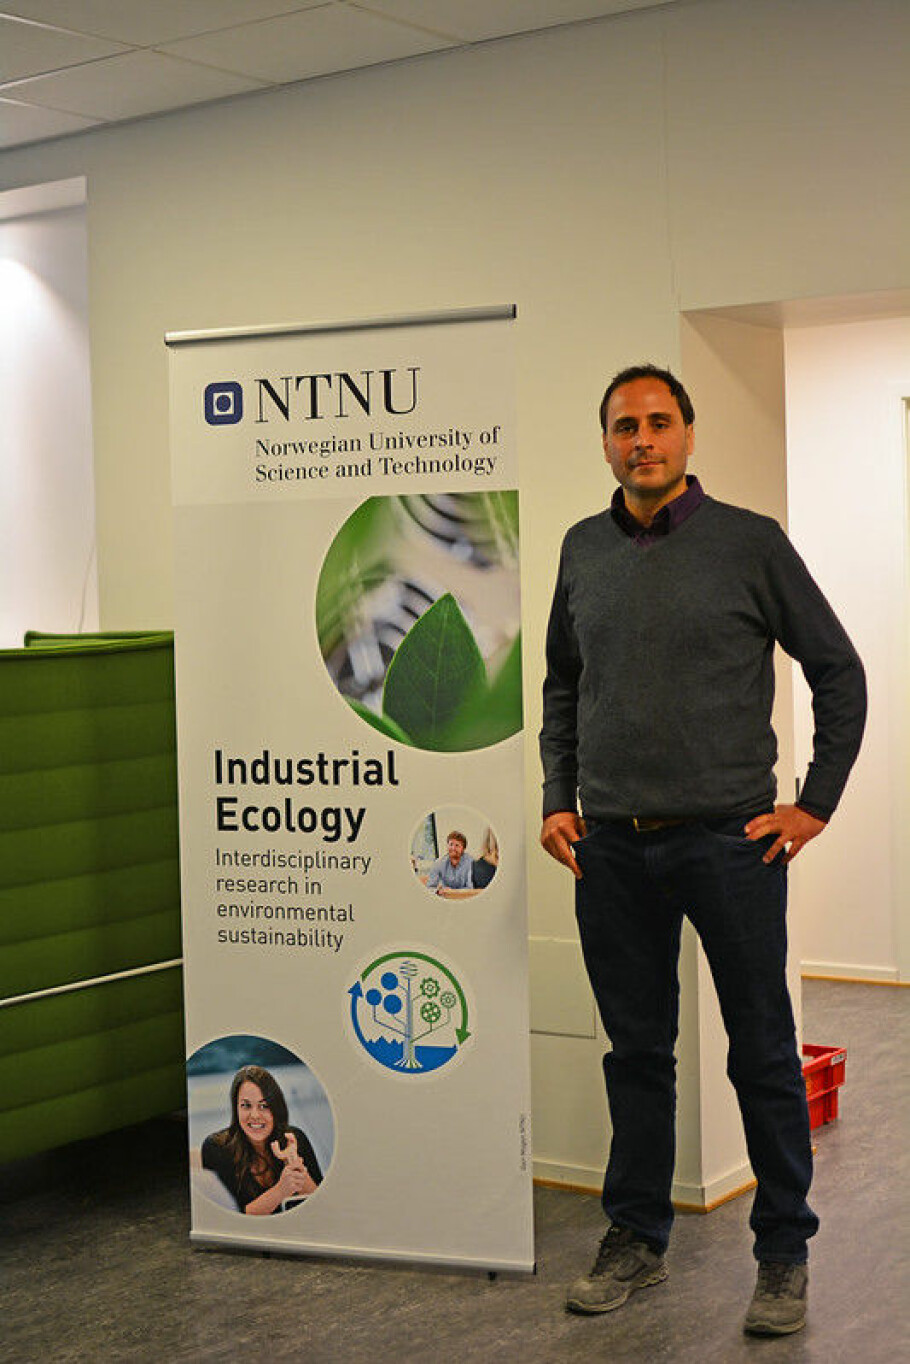 Francesco Cherubini is a professor and director of NTNU’s Industrial Ecology Programme.